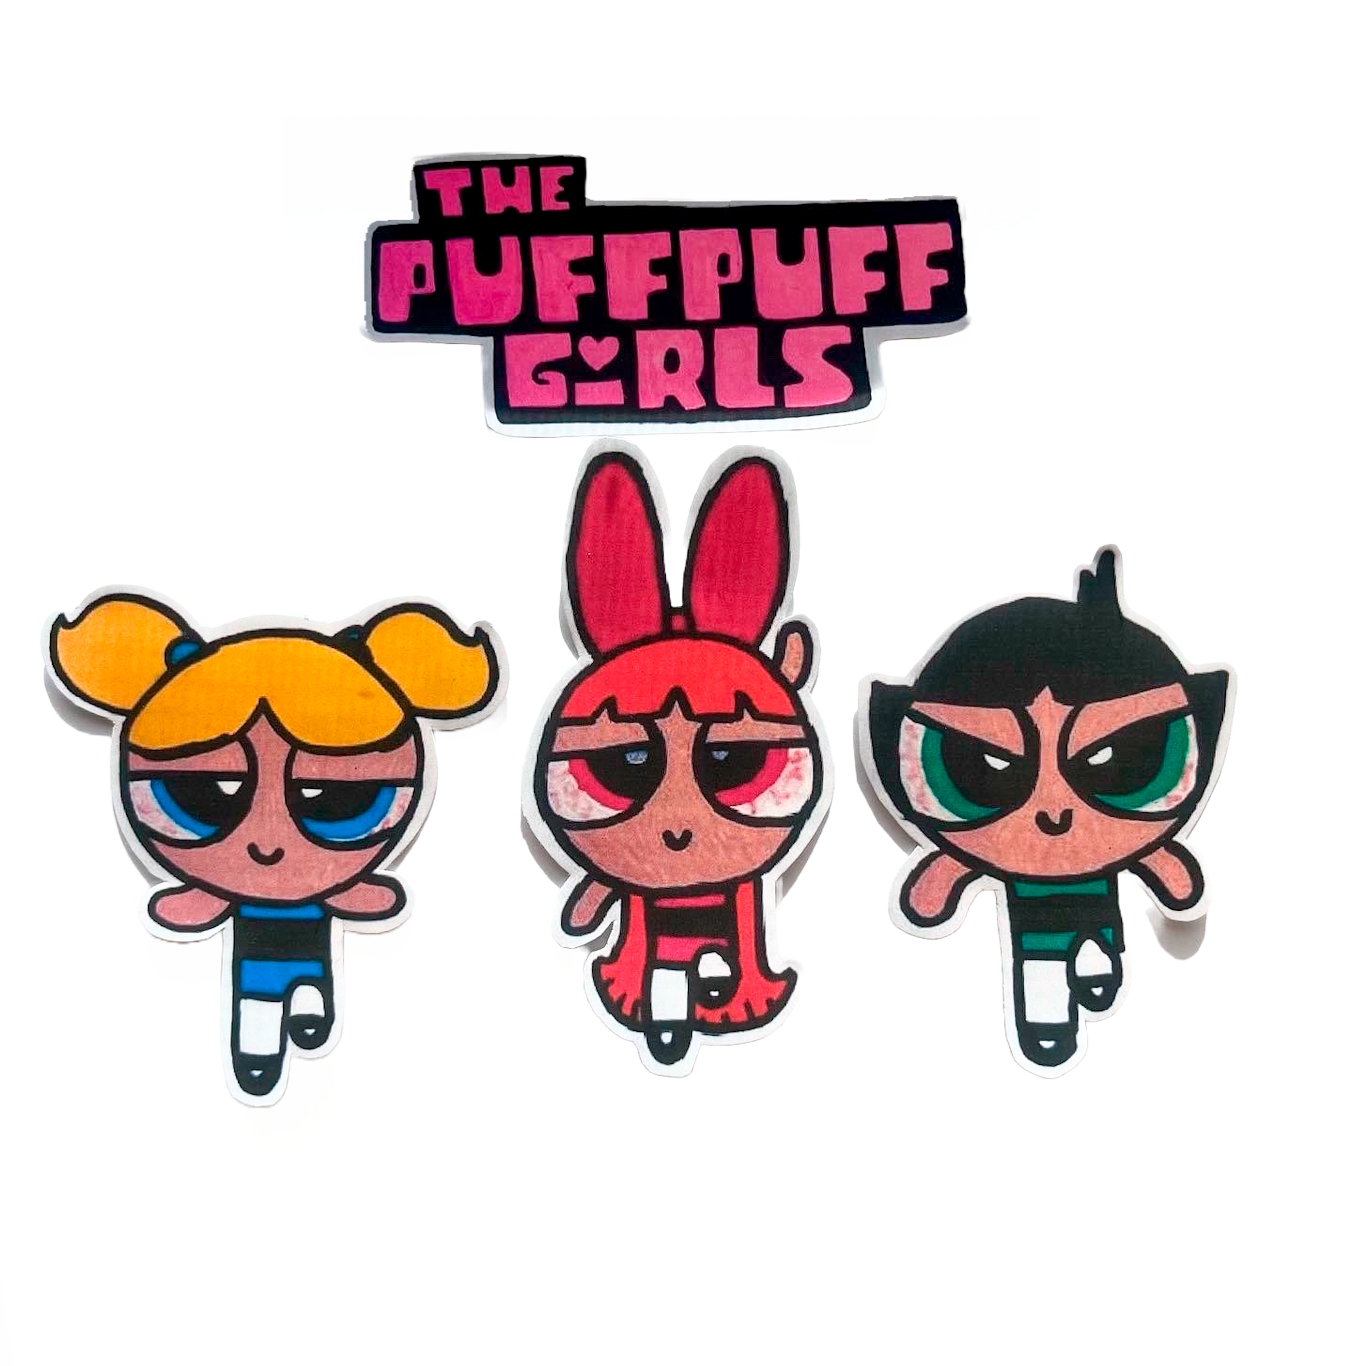 Puffpuff girls stickers